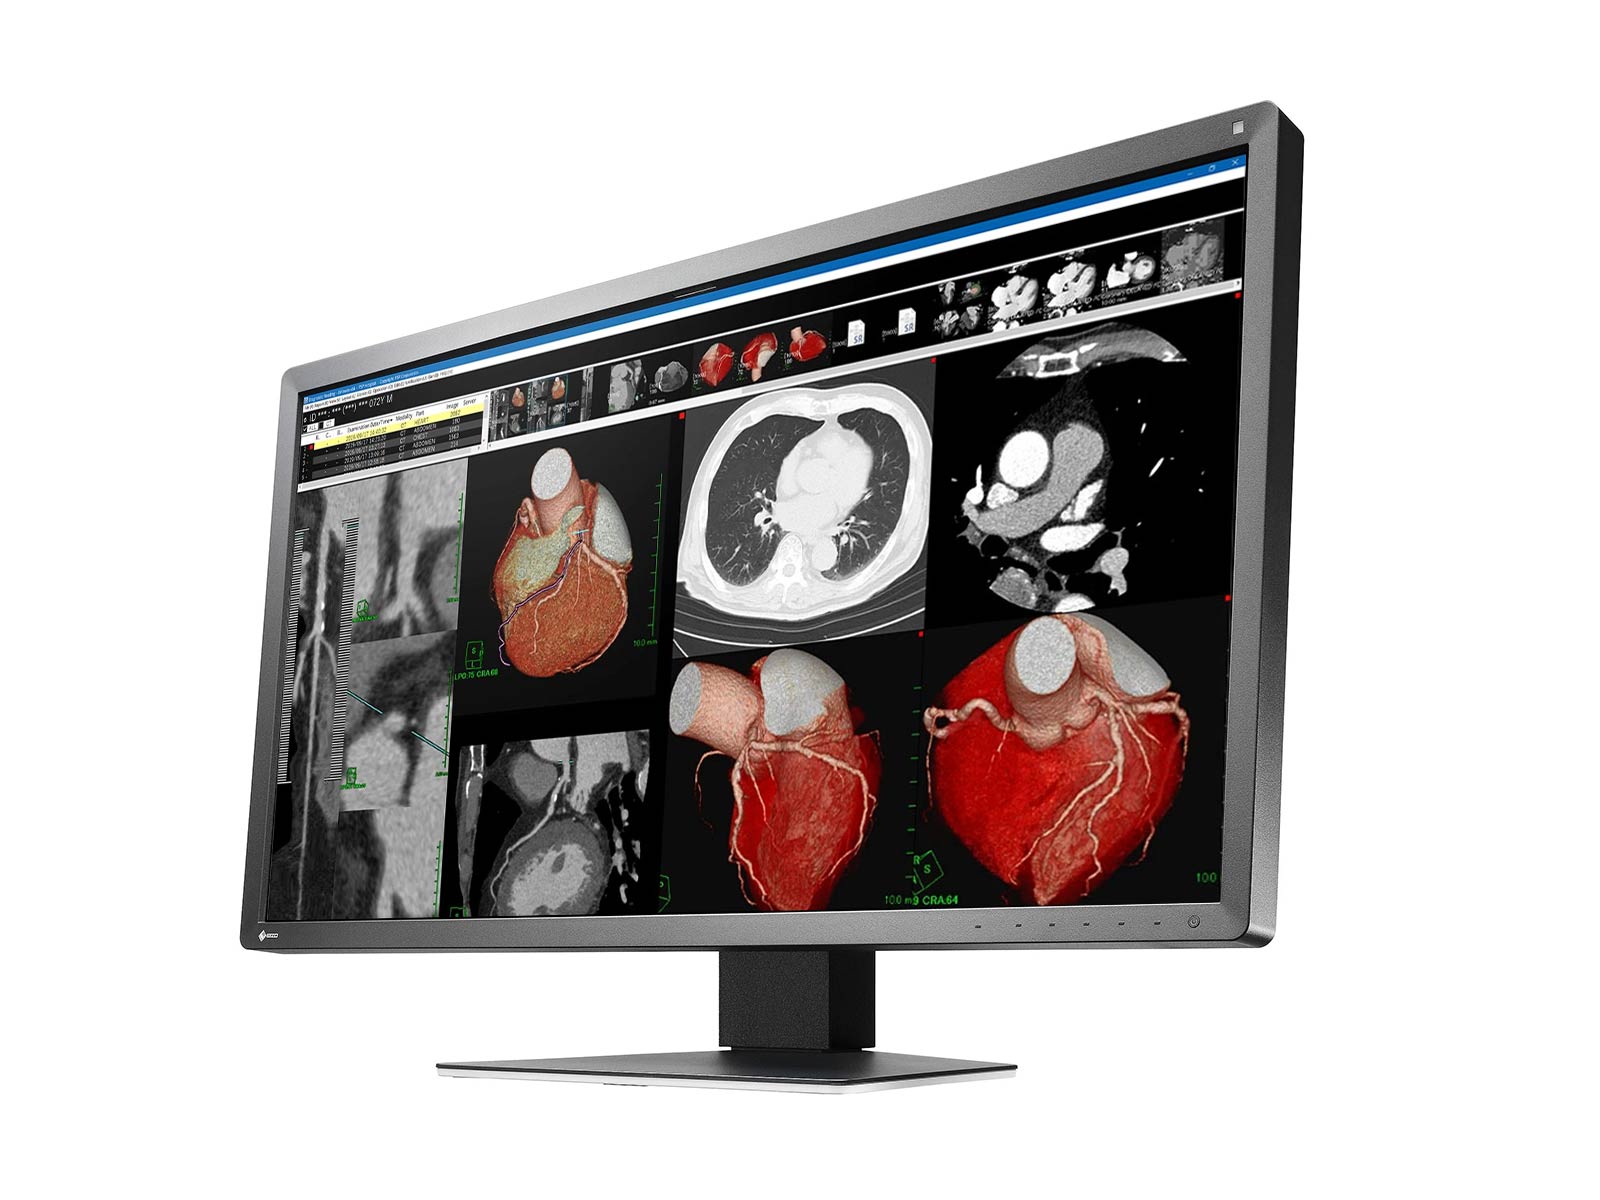 Eizo RadiForce MX317W 8MP 30.5" Color Clinical Review Display Monitor (MX317W-BK)